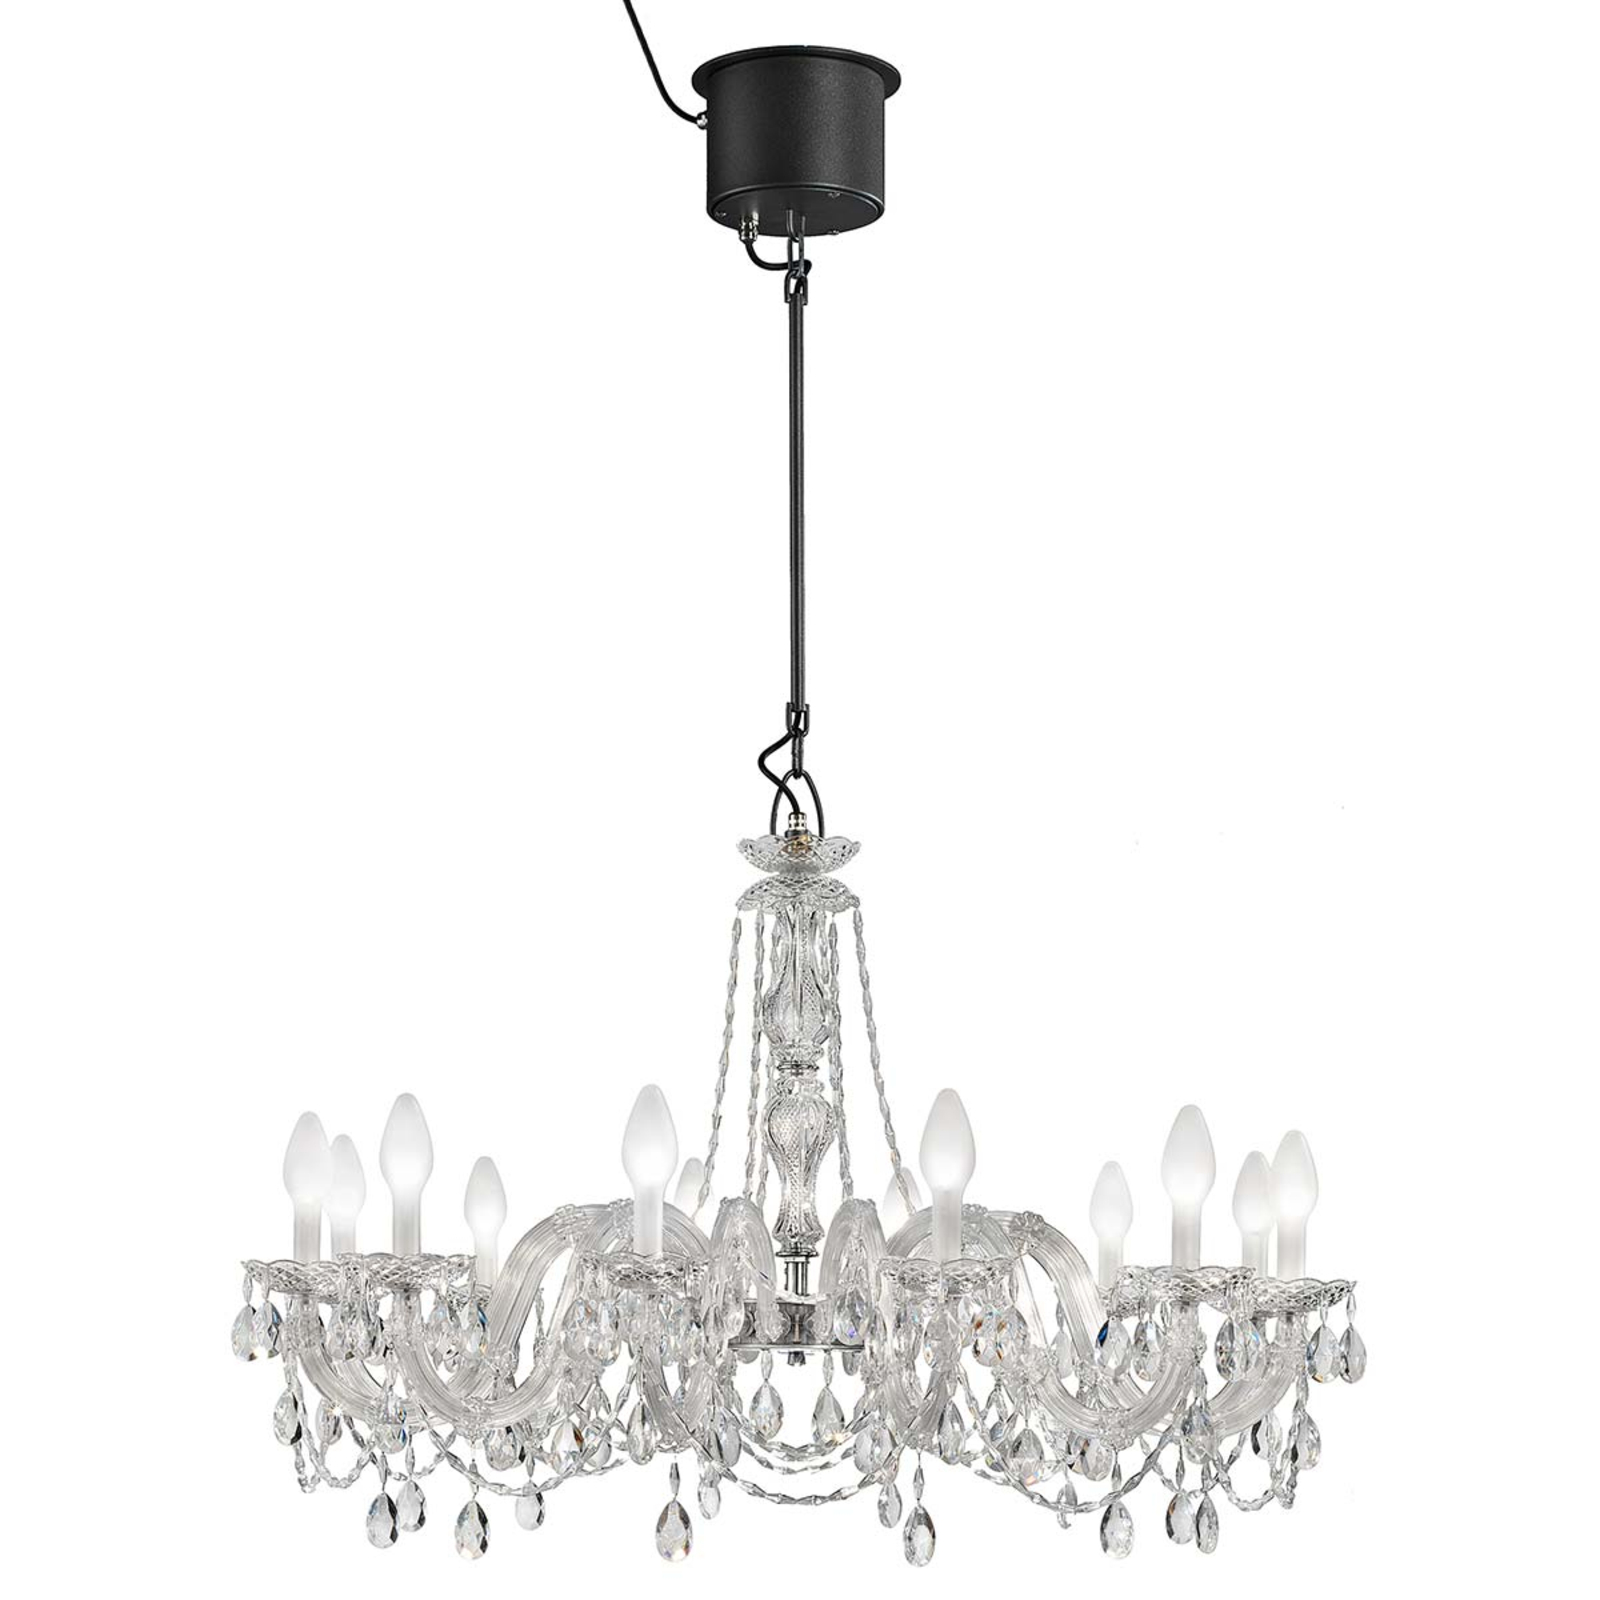 Drylight S12 12-bulb outdoor LED chandelier